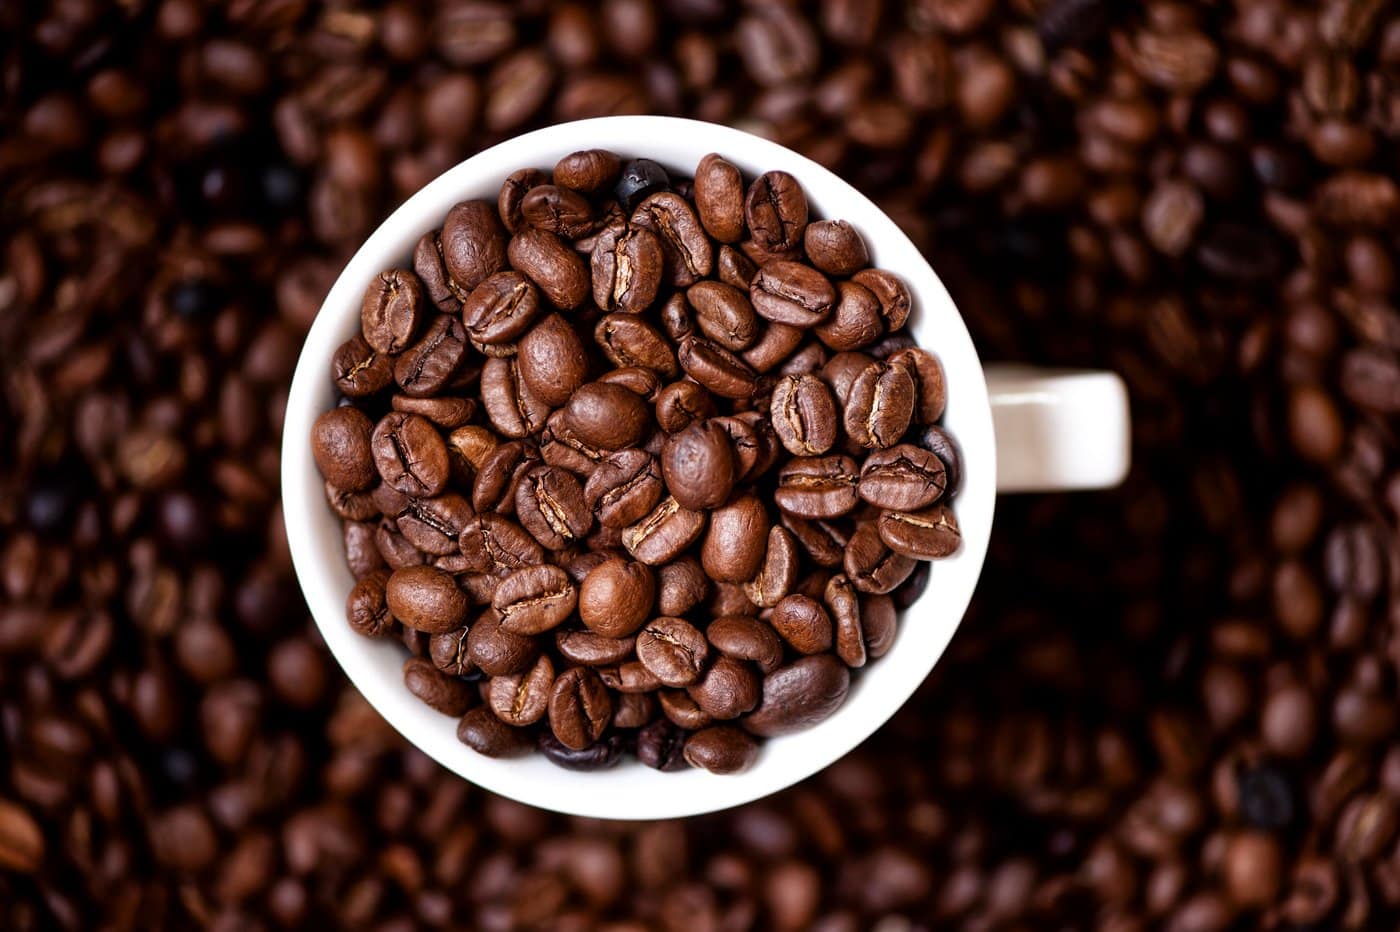 Coffee mug filled with dark coffee beans